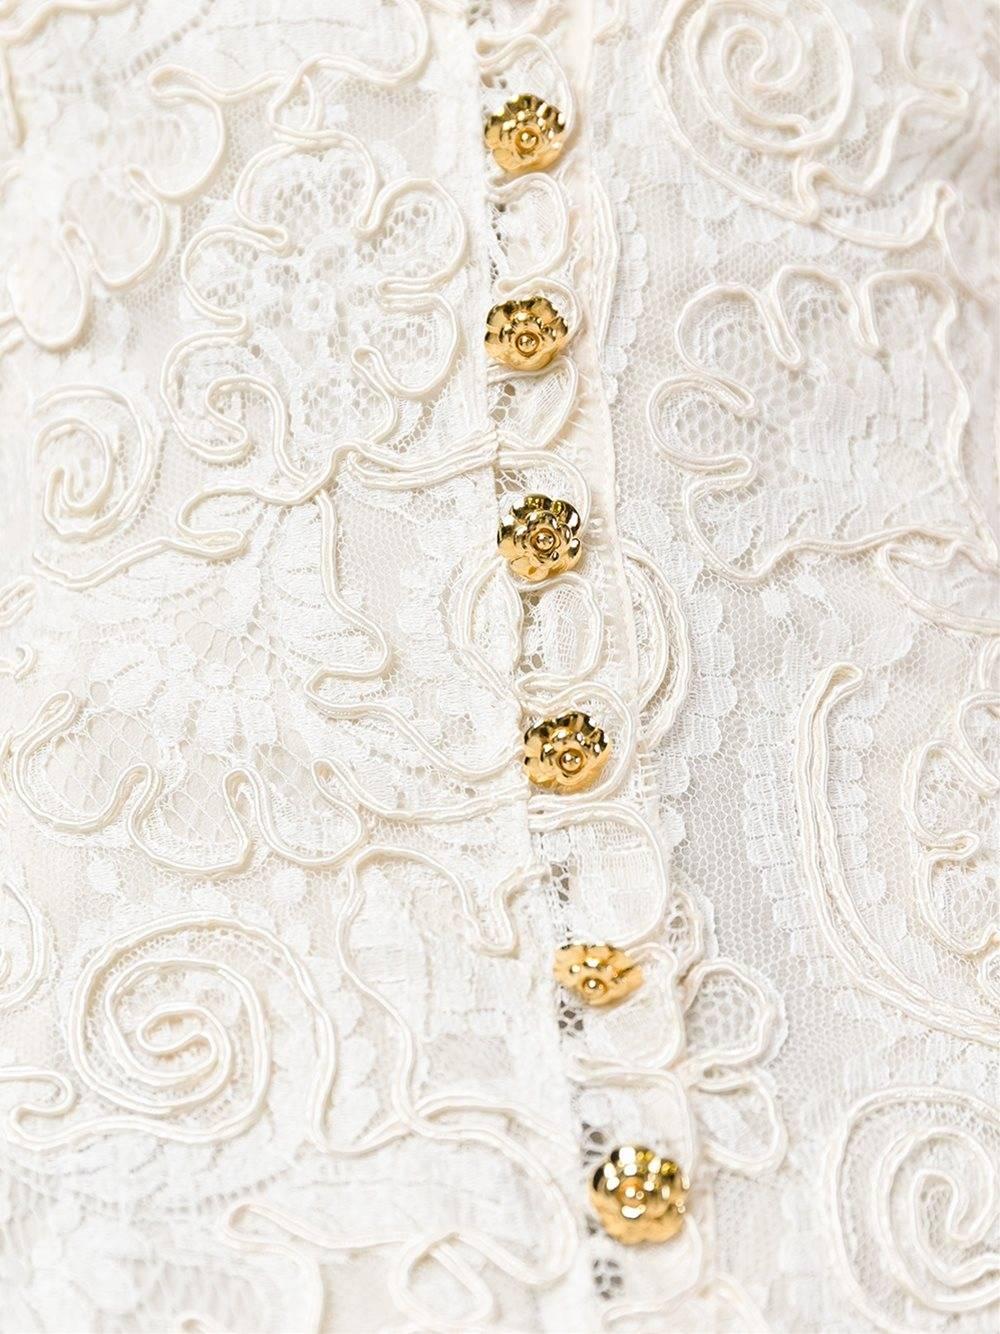 Cream cotton strapless lace dress. 

Colour: White

Material: Cotton 100%

Size: S

Measurements: waist: 68 centimetres, hips: 90 centimetres, length: 80 centimetres, bust: 74 centimetres

Condition: 9.5 out of 10